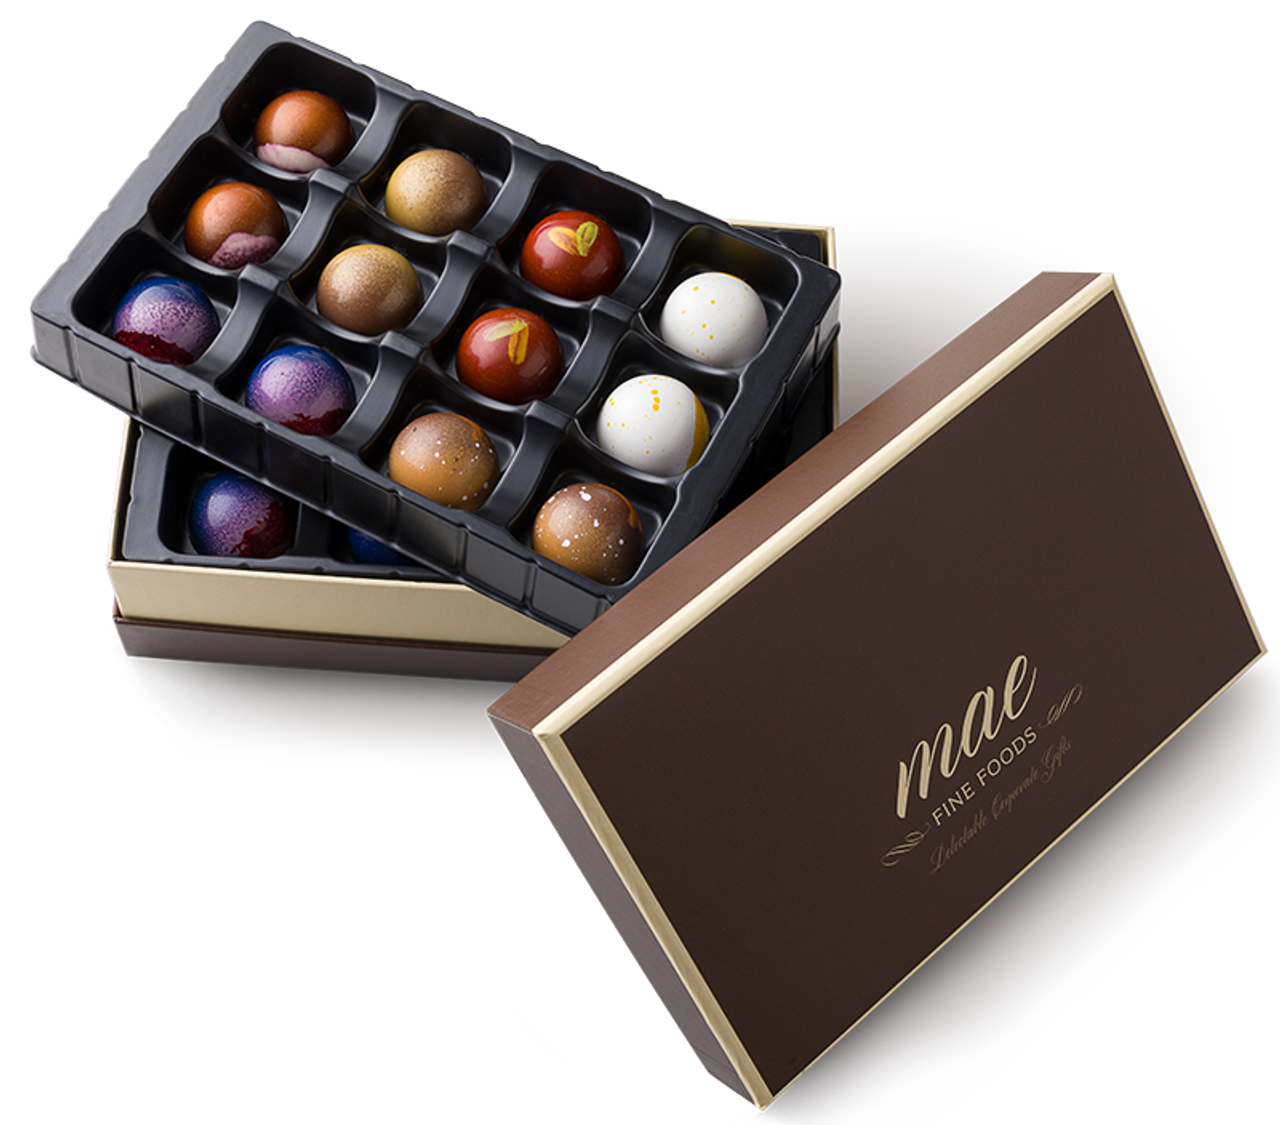 Malley's Chocolates – Chocolate Bars, Truffles, Fudge, & More